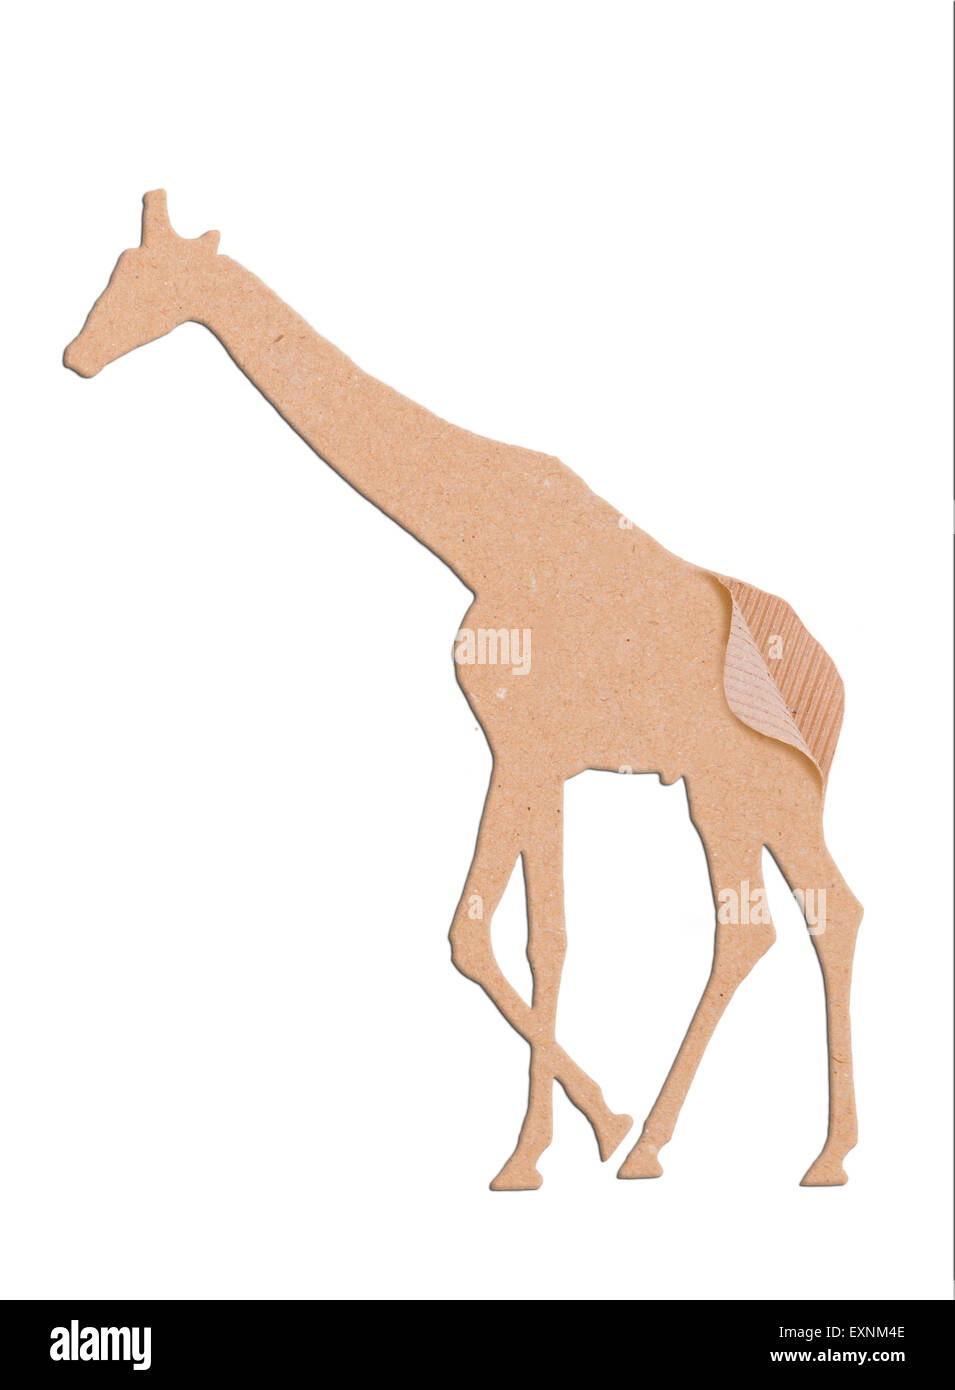 giraffe shape paper box on white background Stock Photo